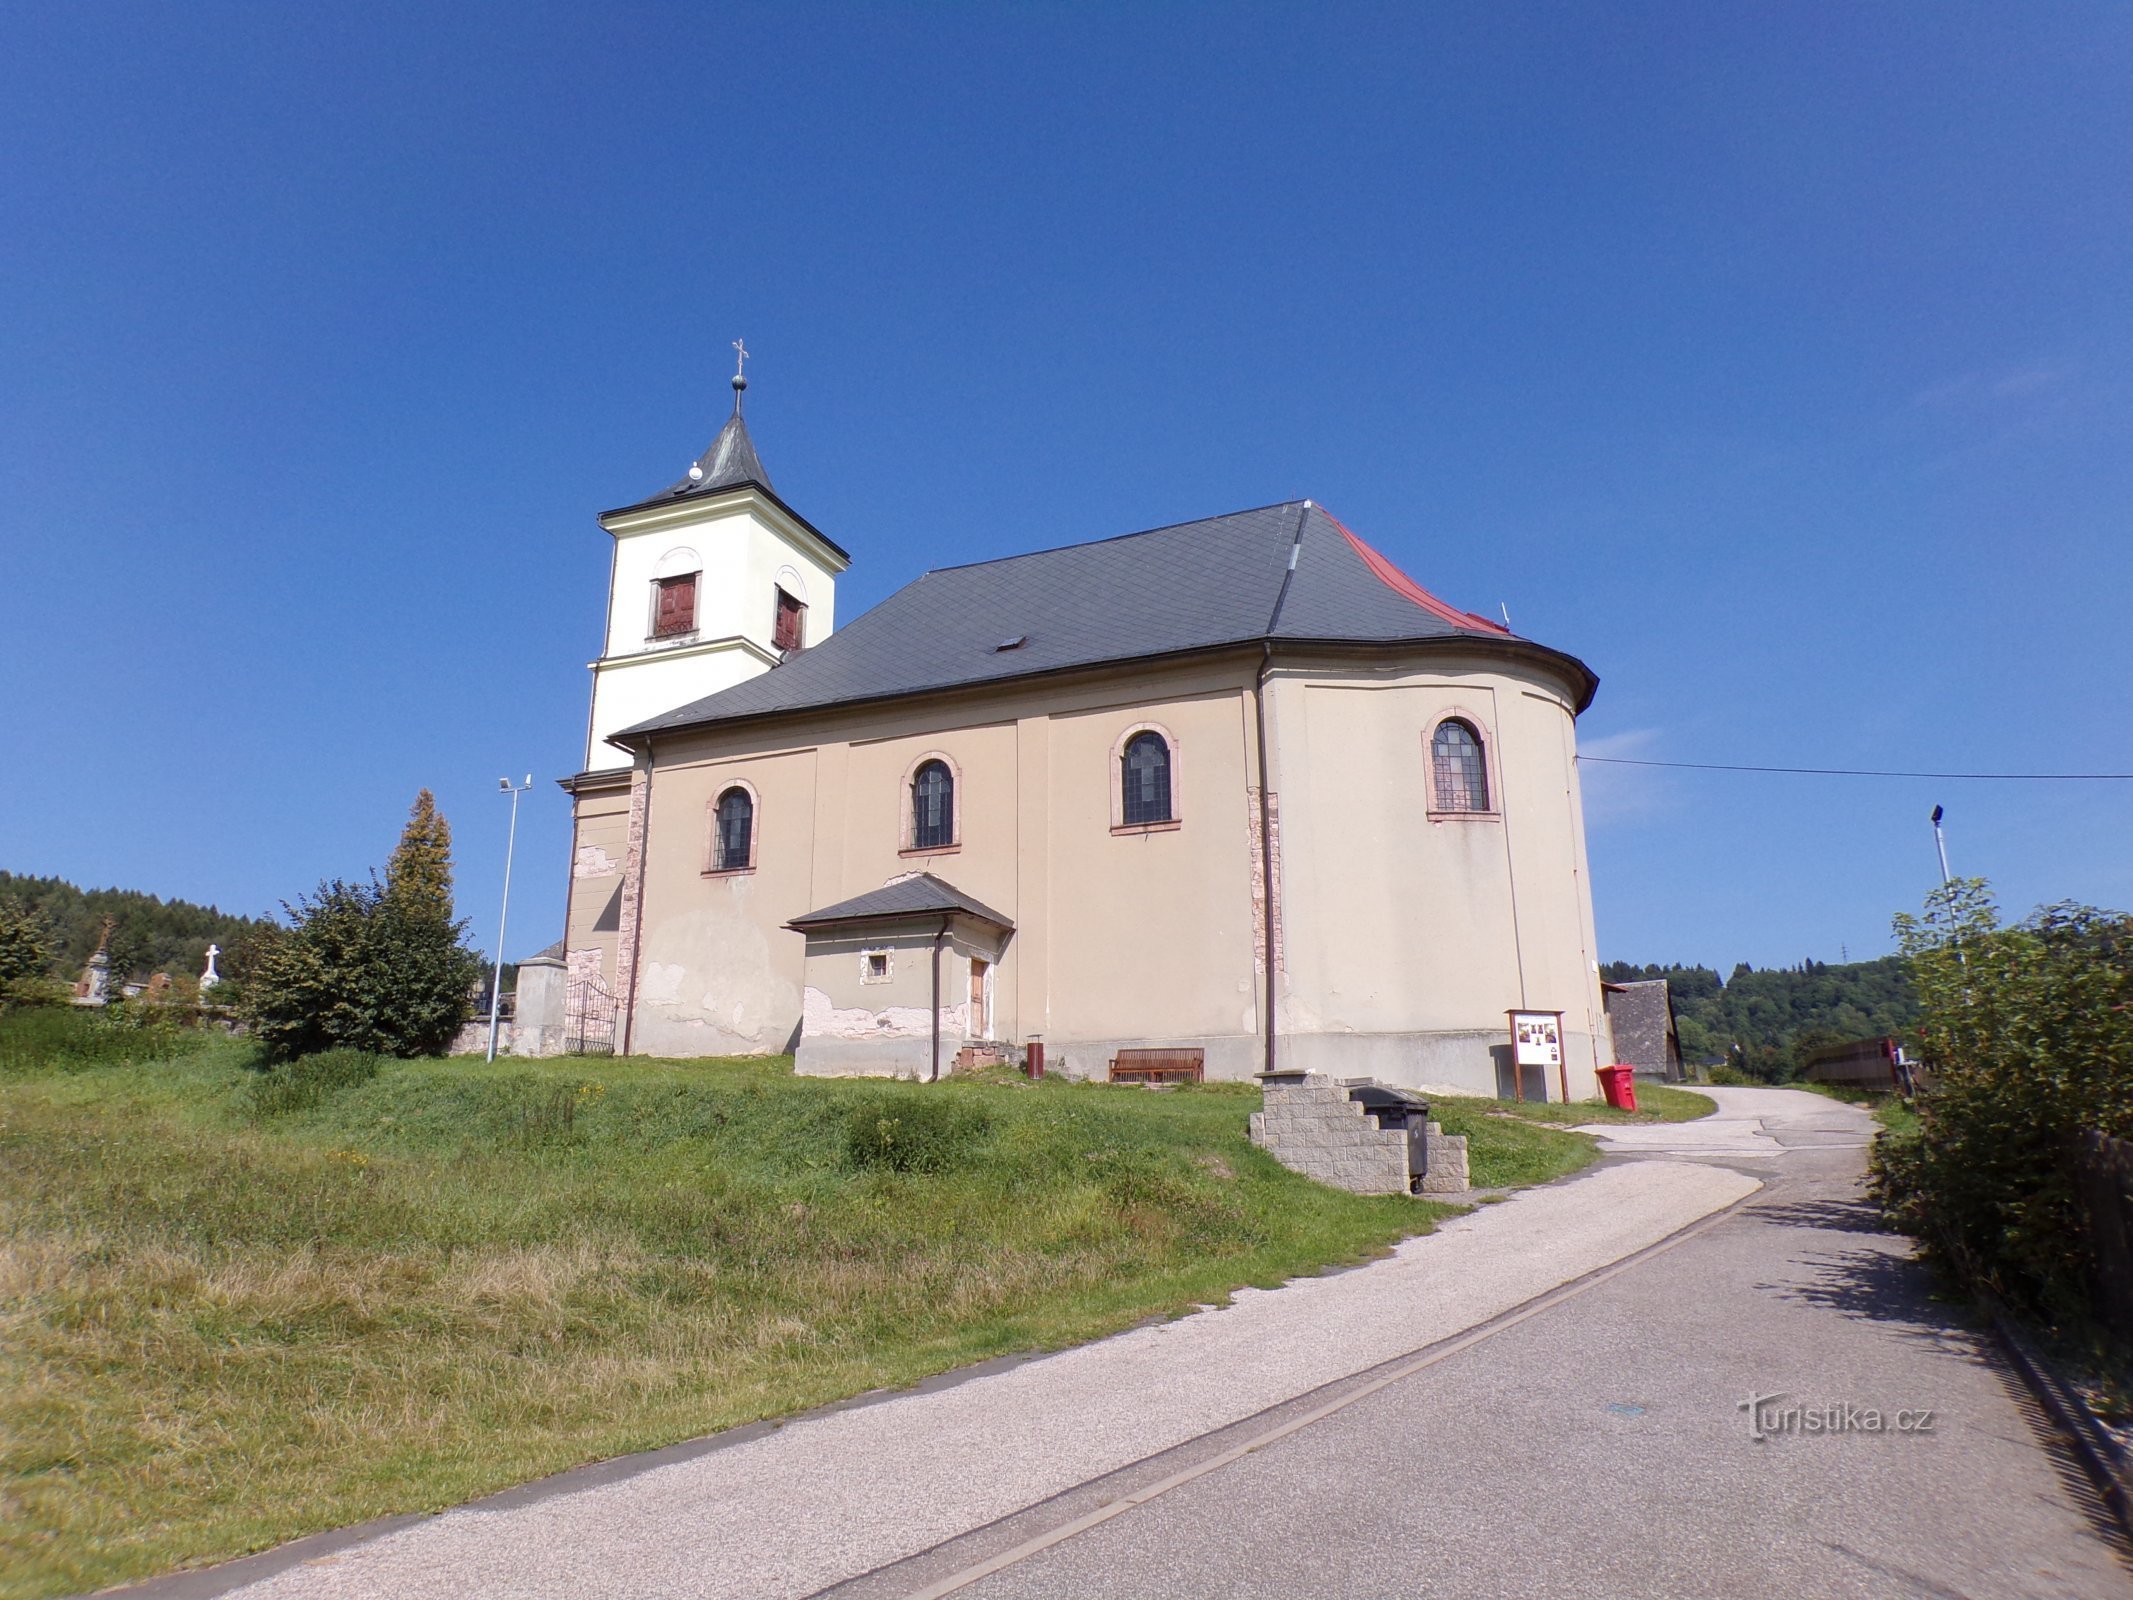 Church of St. John the Baptist (Markoušovice, 6.9.2021/XNUMX/XNUMX)